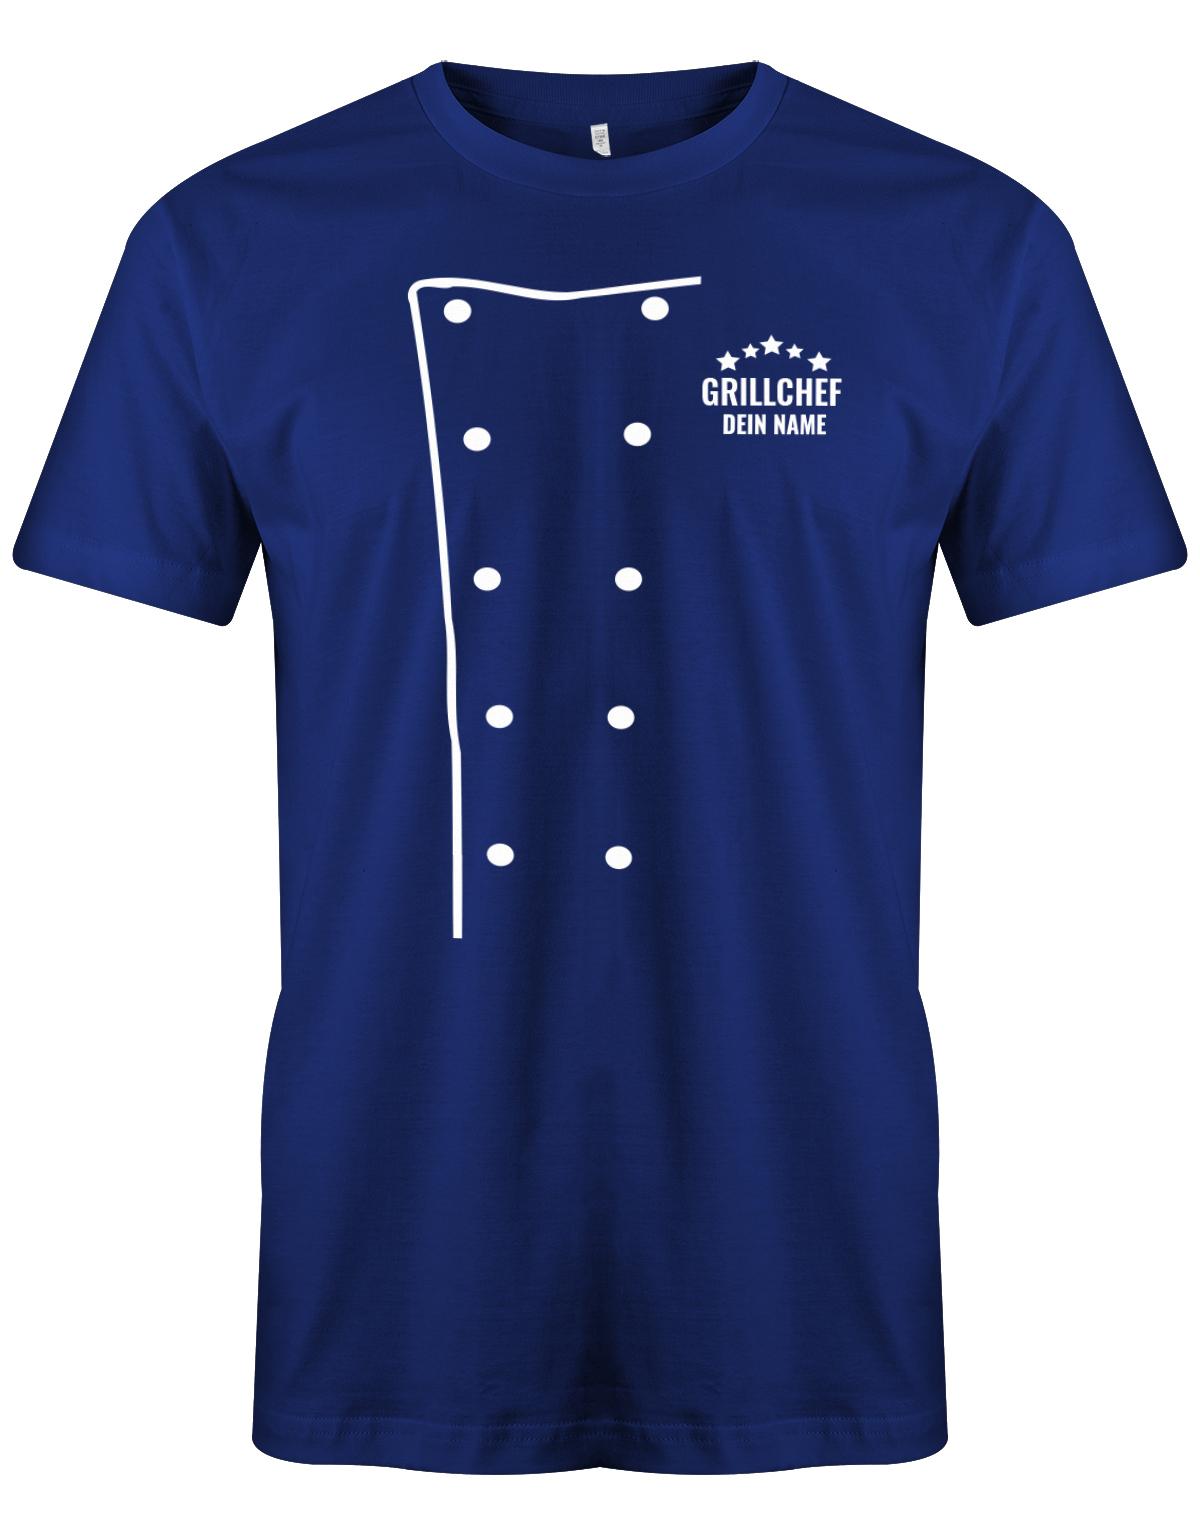 Grillchef-Wunschname-Herren-Shirt-royalblau